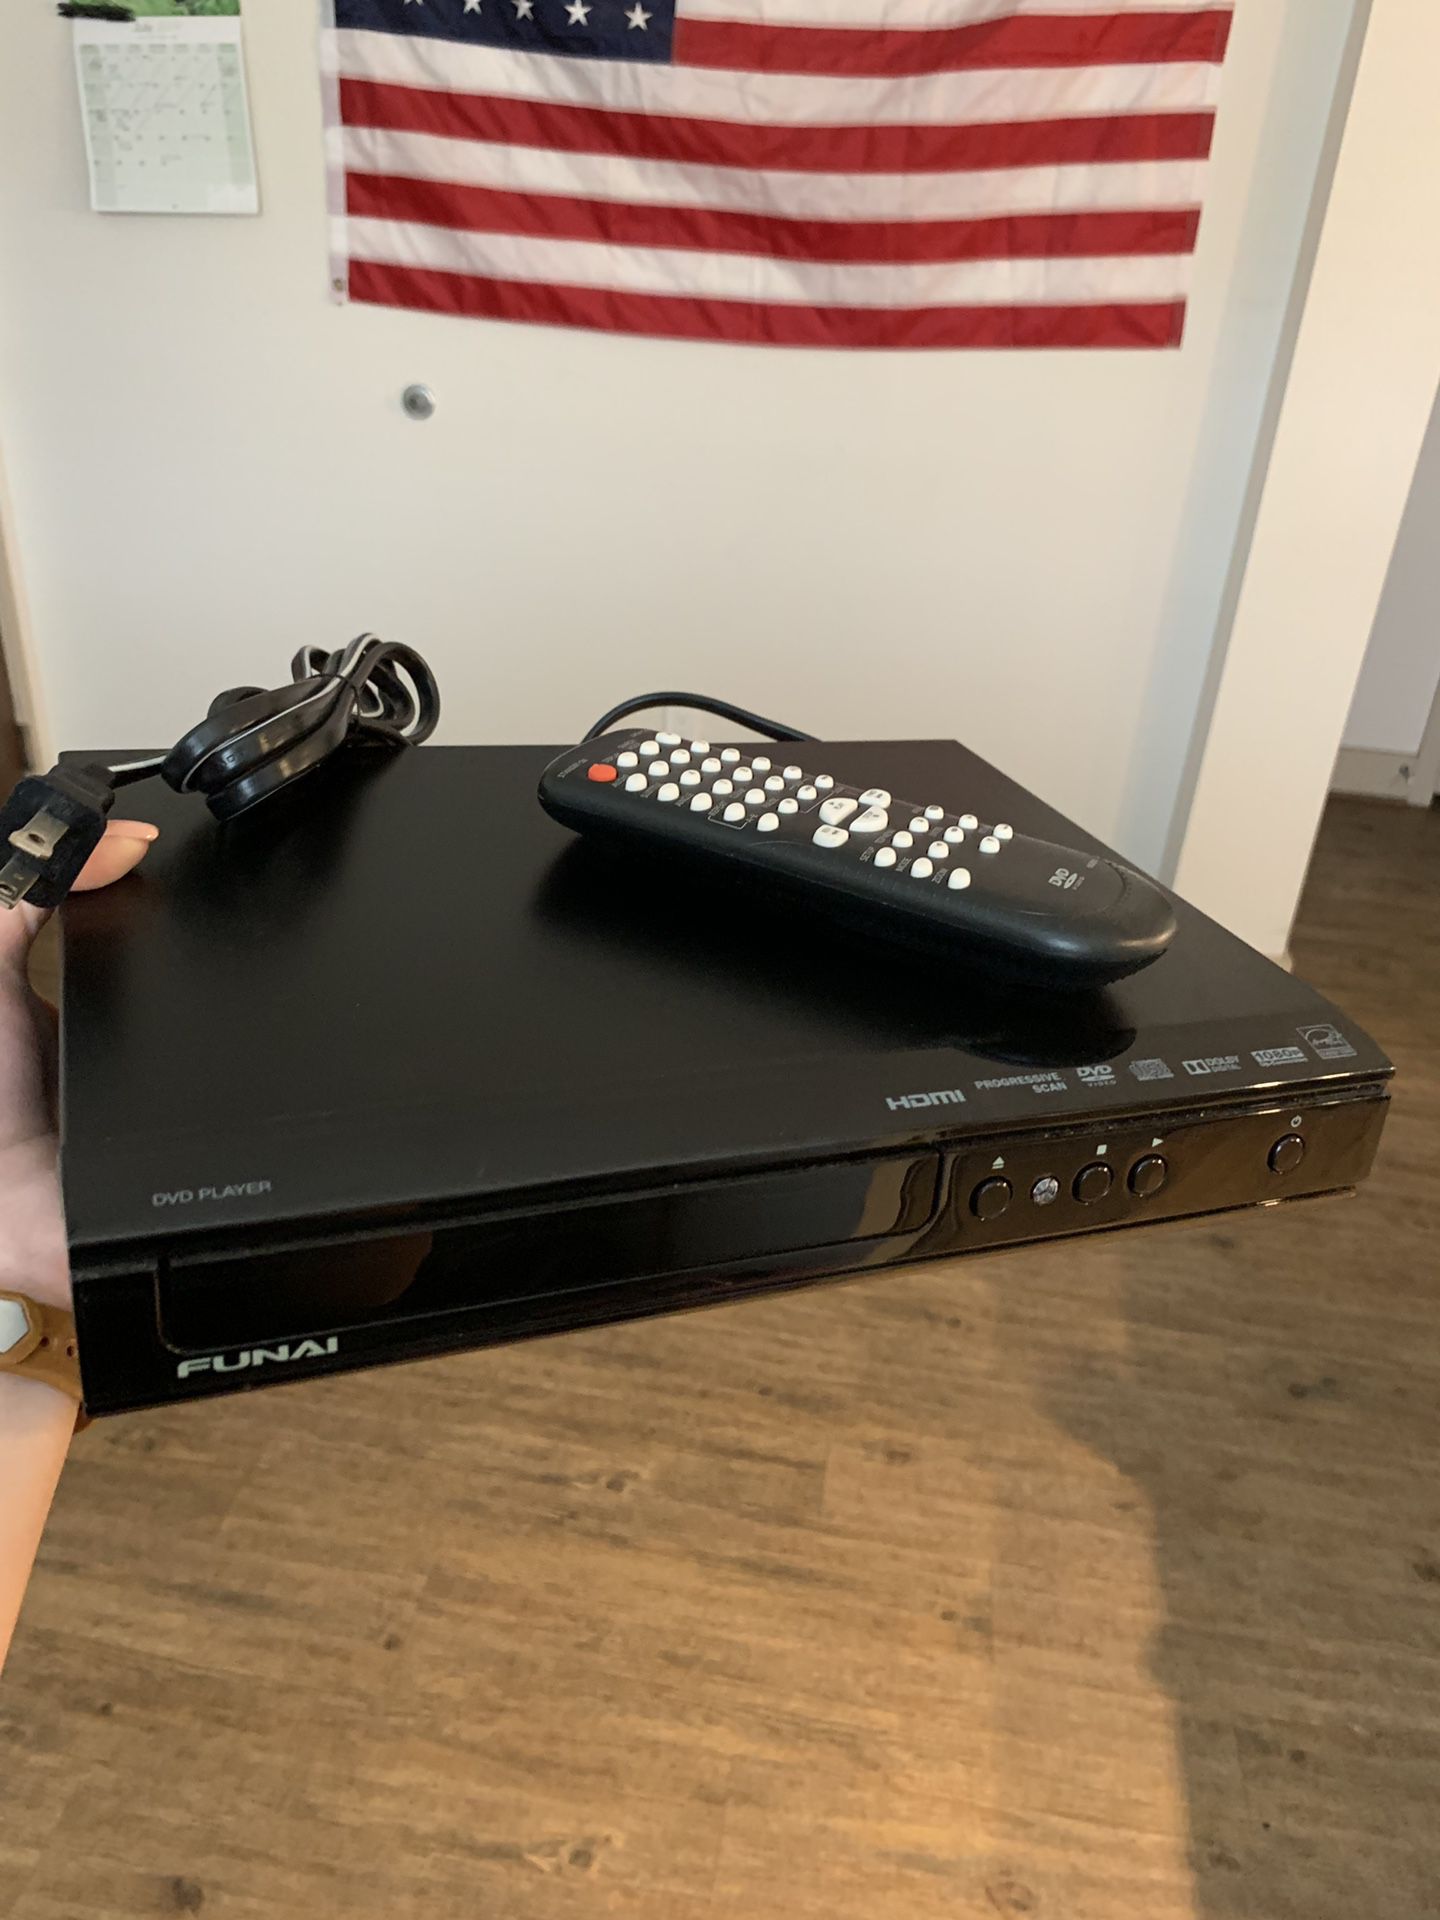 Funai DVD Player with remote